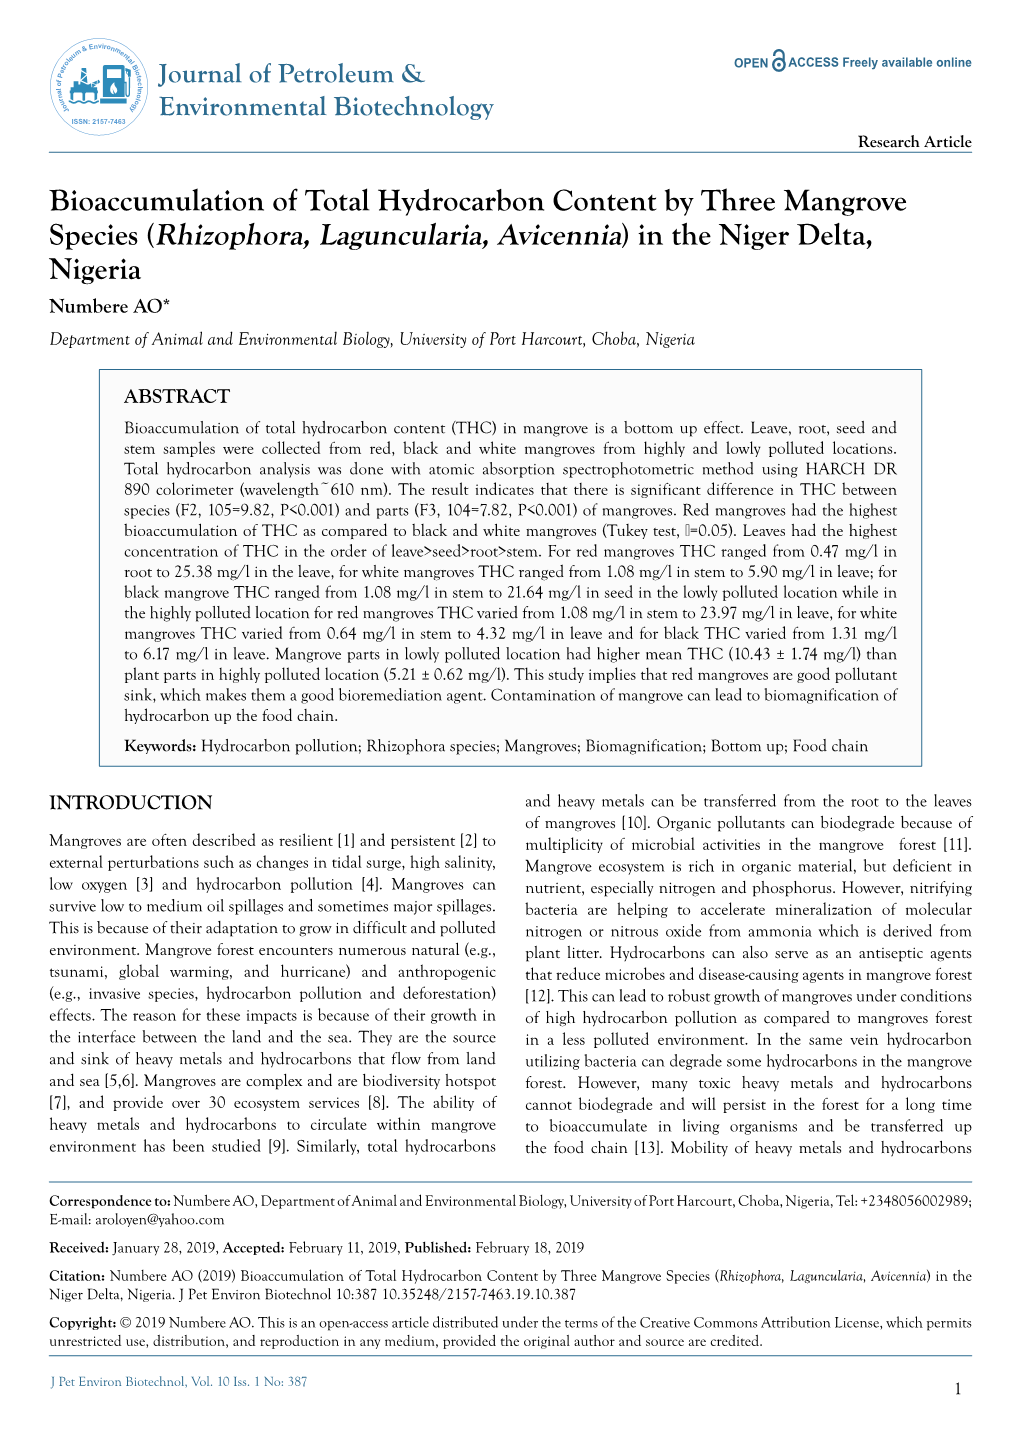 Bioaccumulation of Total Hydrocarbon Content by Three Mangrove Species (Rhizophora, Laguncularia, Avicennia) in the Niger Delta